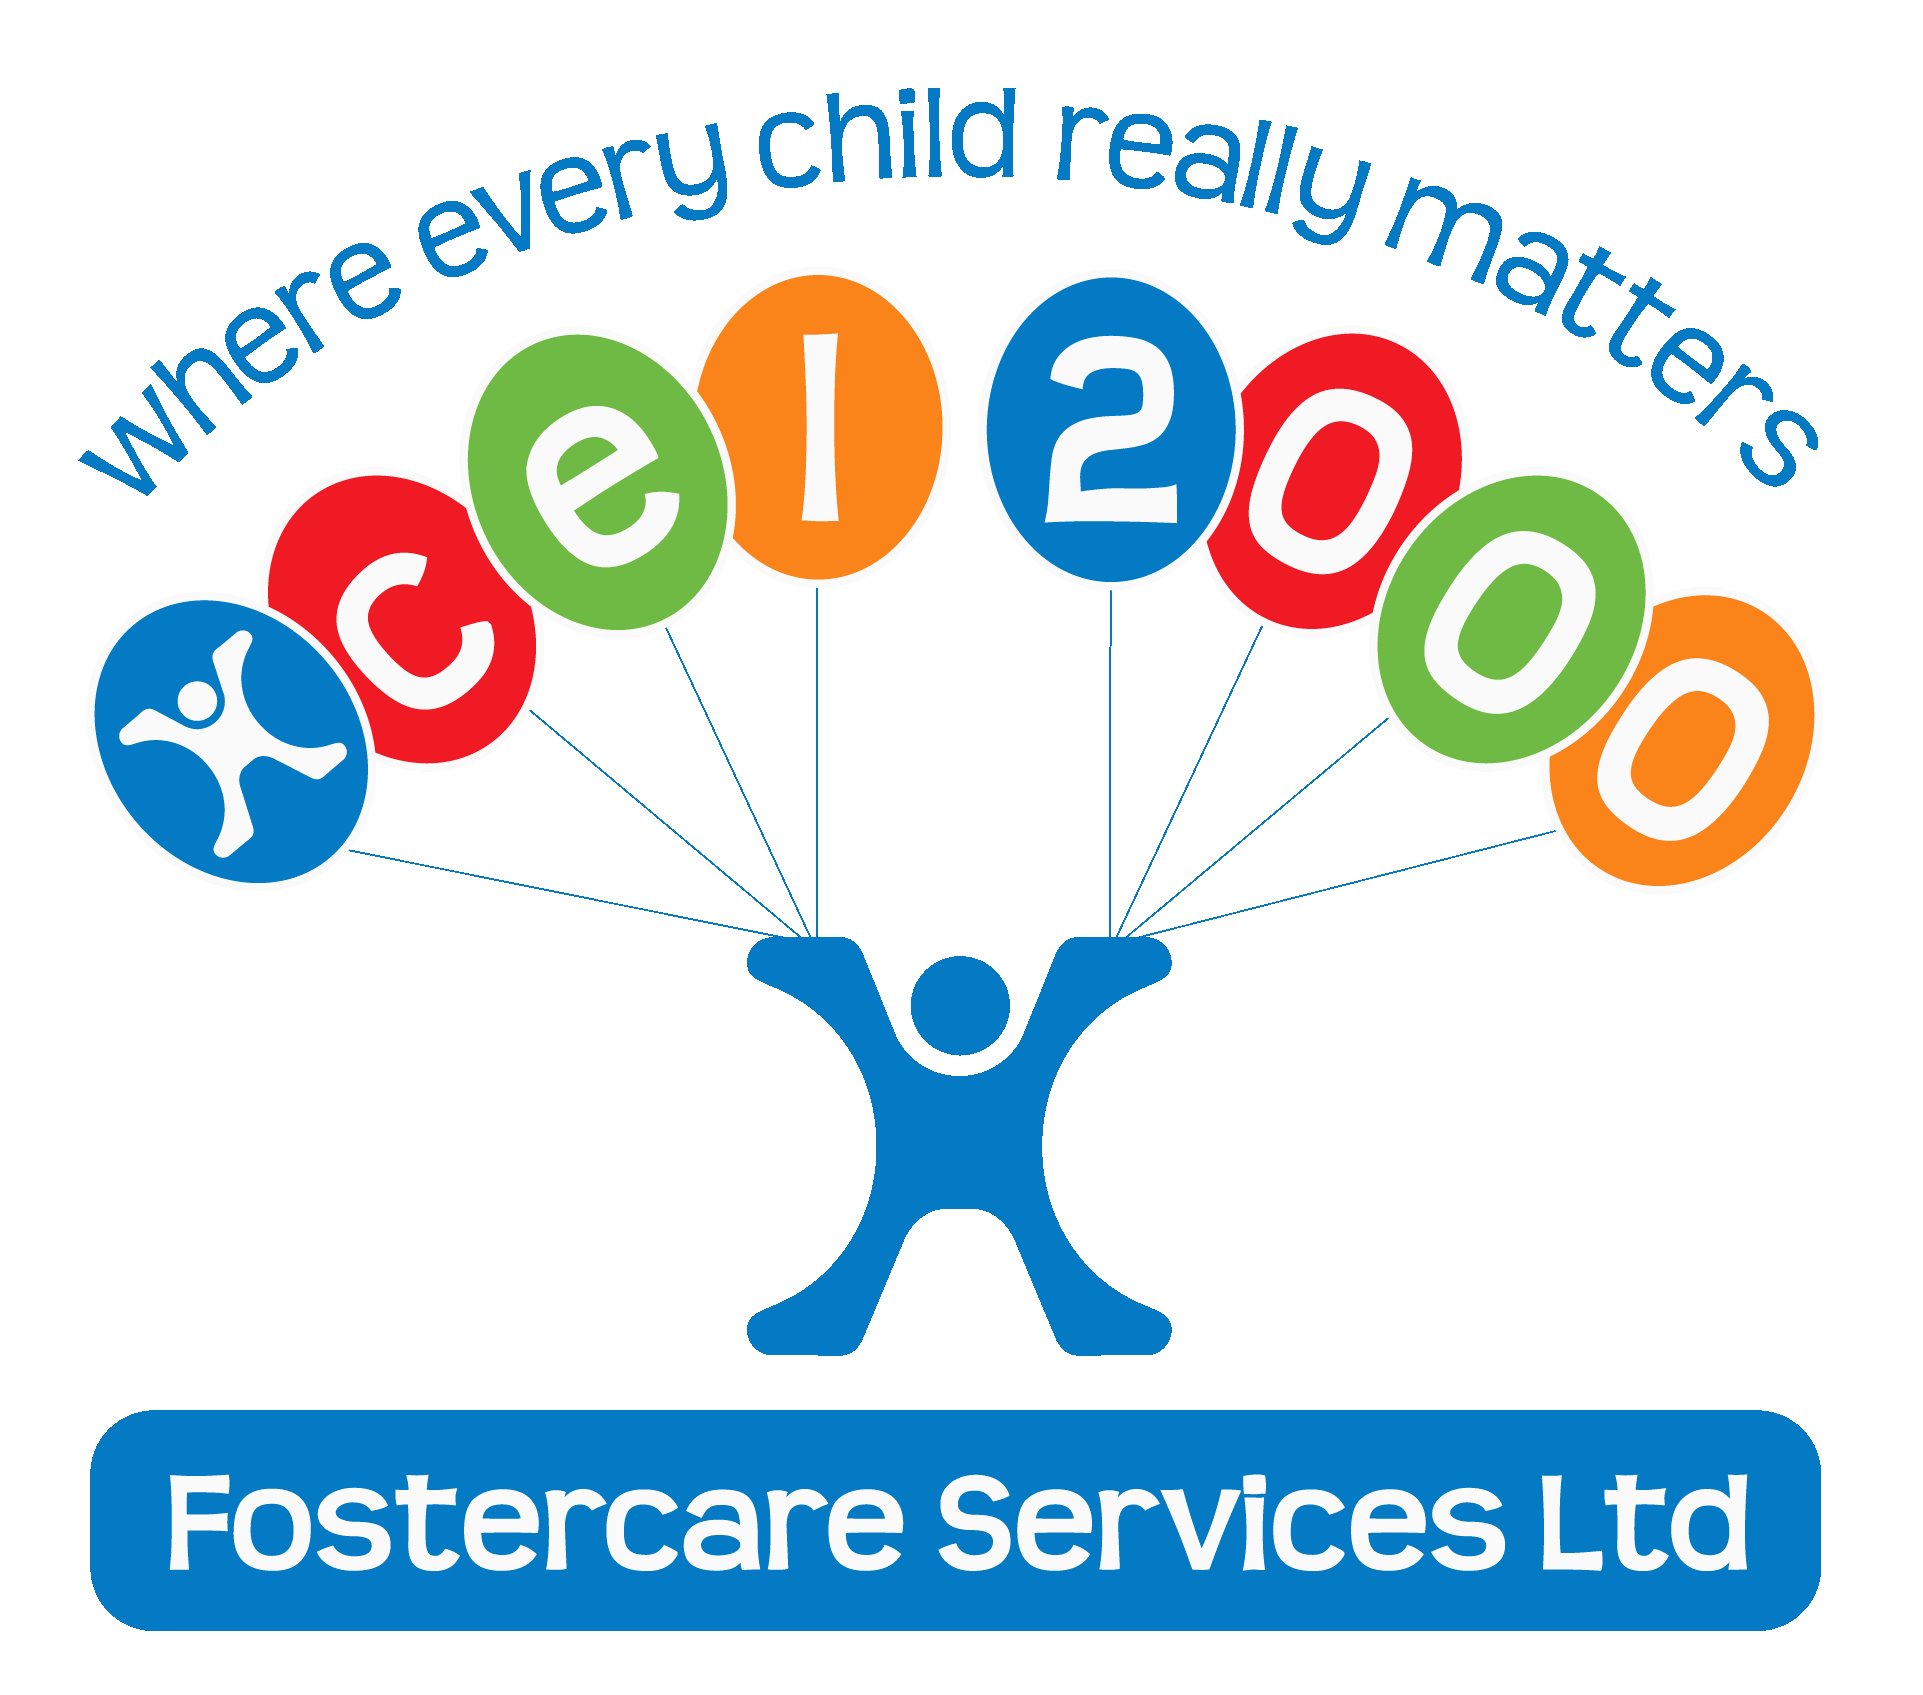 Xcel 2000 Fostercare Ltd Swale, South East